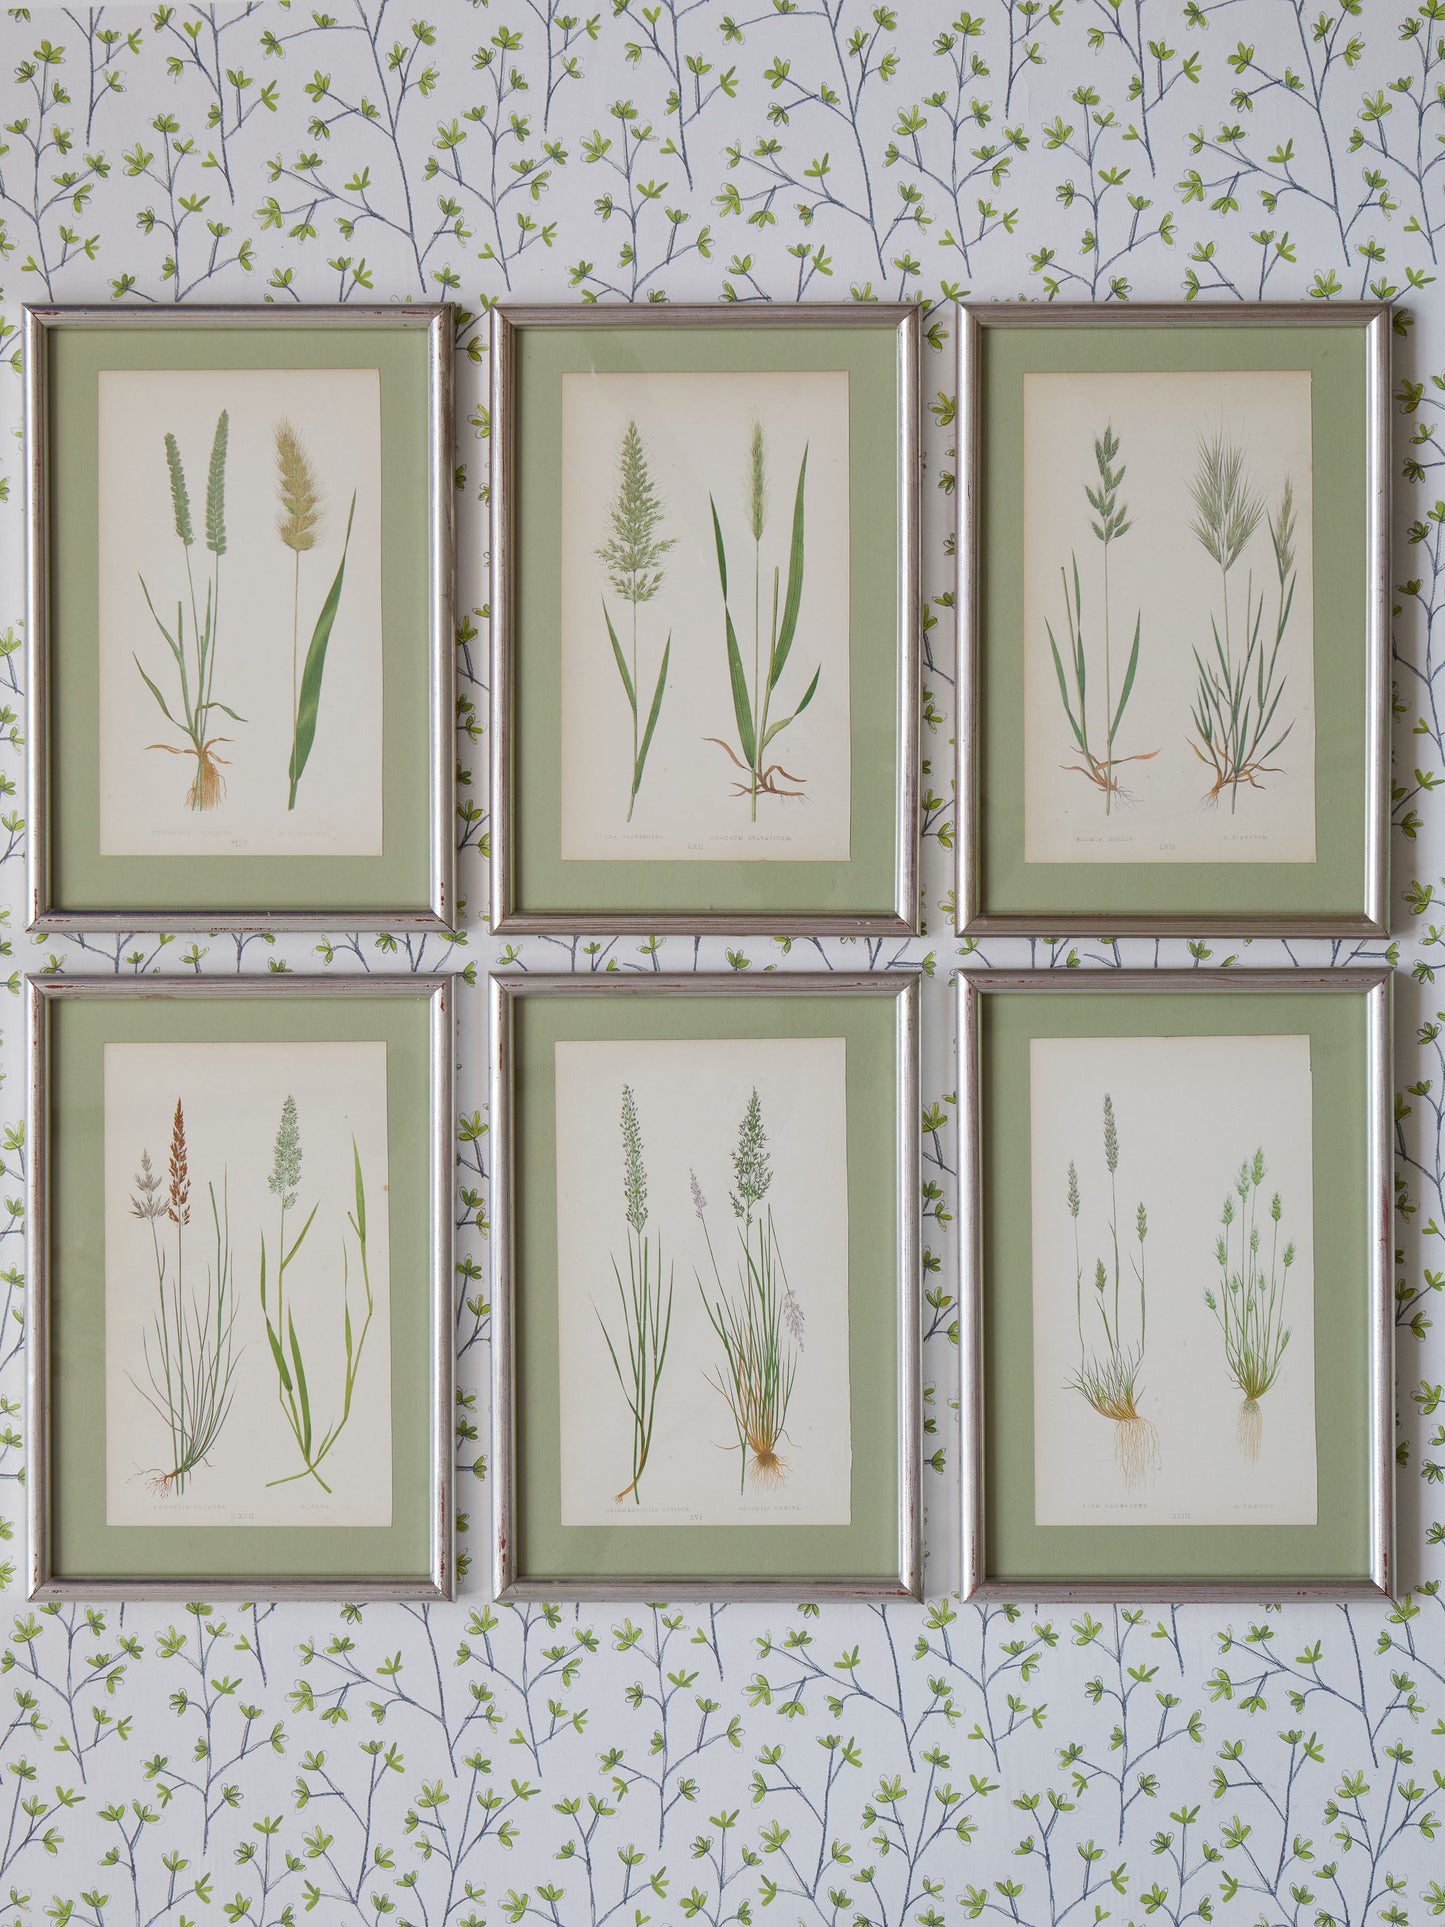 A Set of Six Antique Prints of Grasses